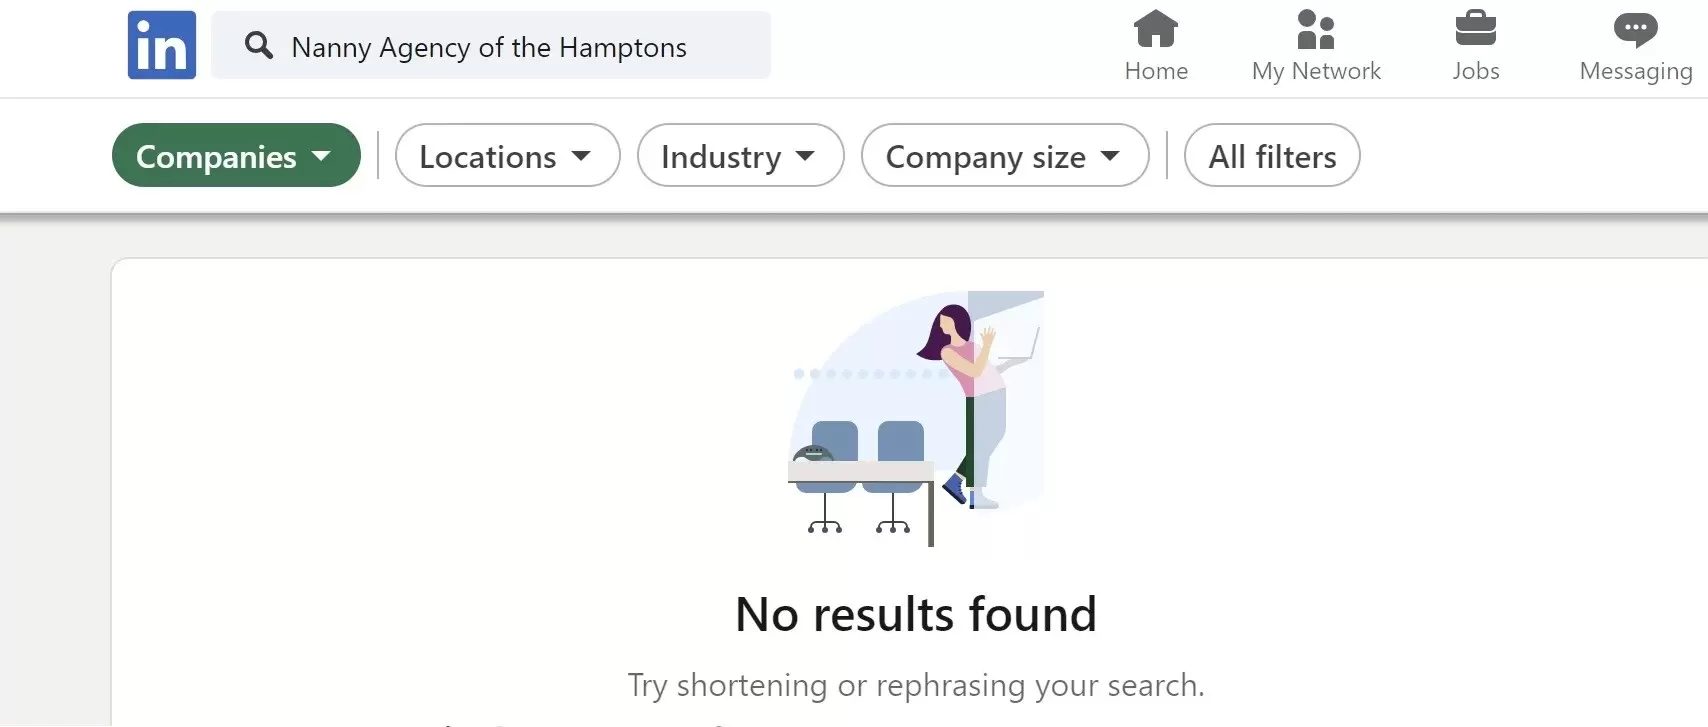 Nanny Agency of the Hamptons on LinkedIn